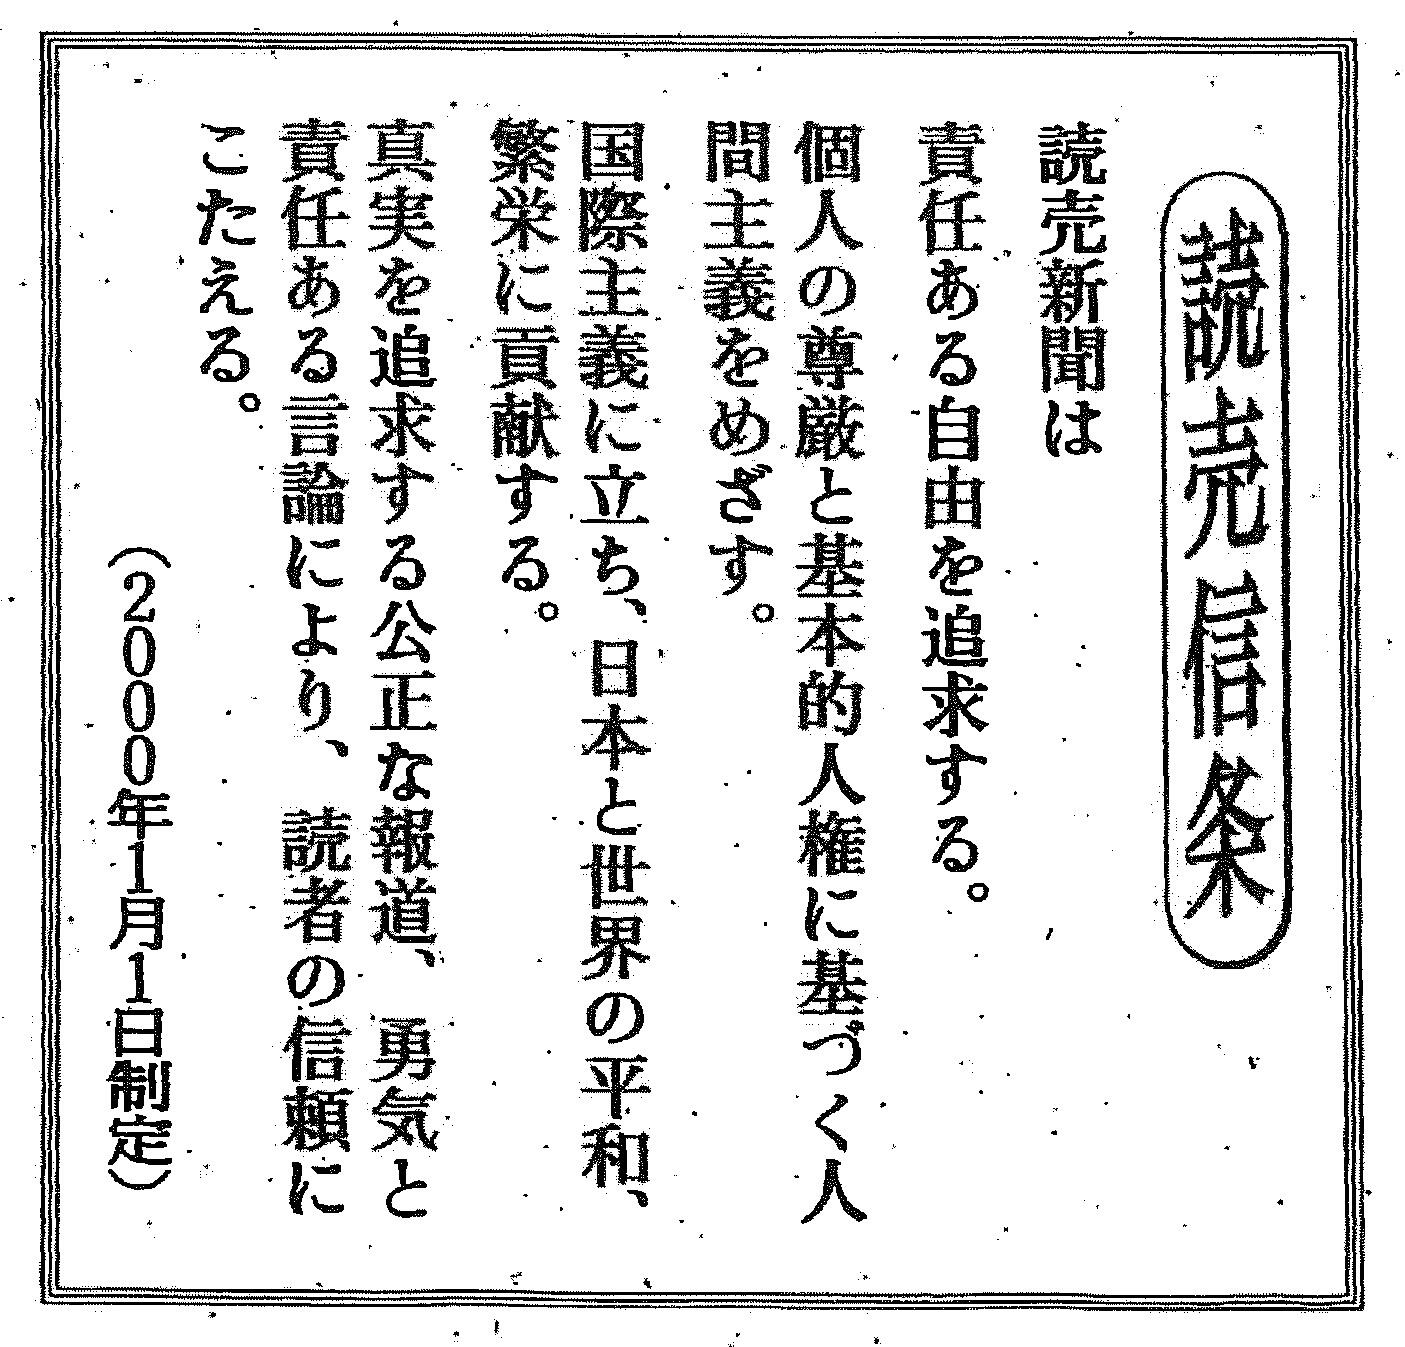 New Creed of The Yomiuri Shimbun